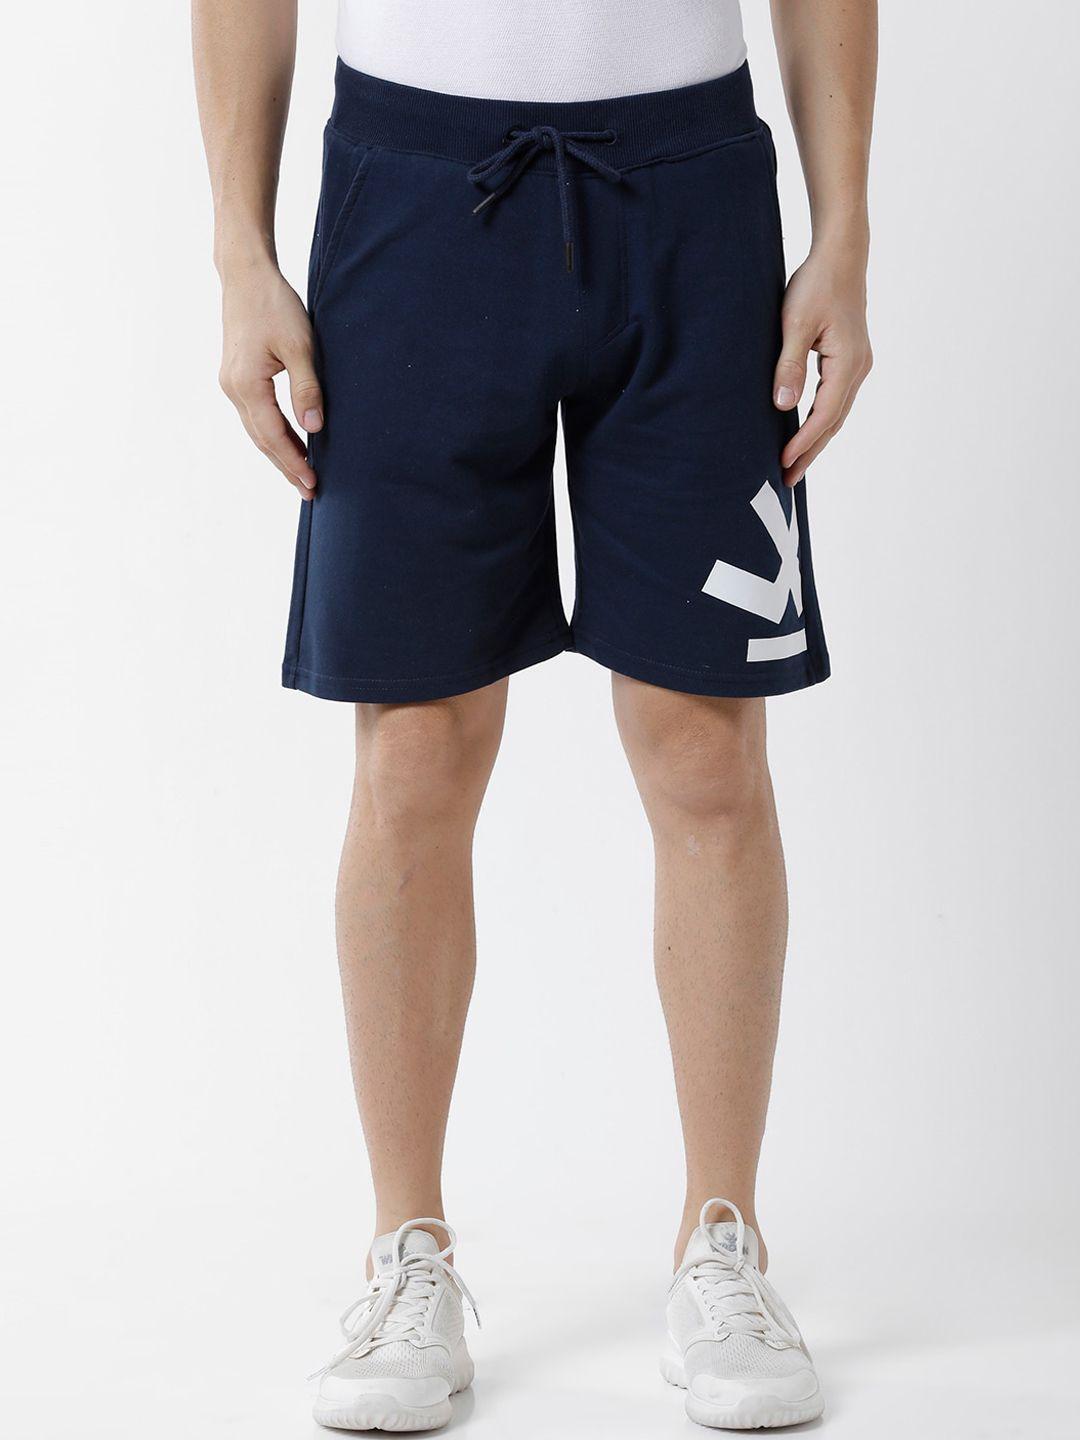 wrogn men brand logo printed slim fit sports shorts